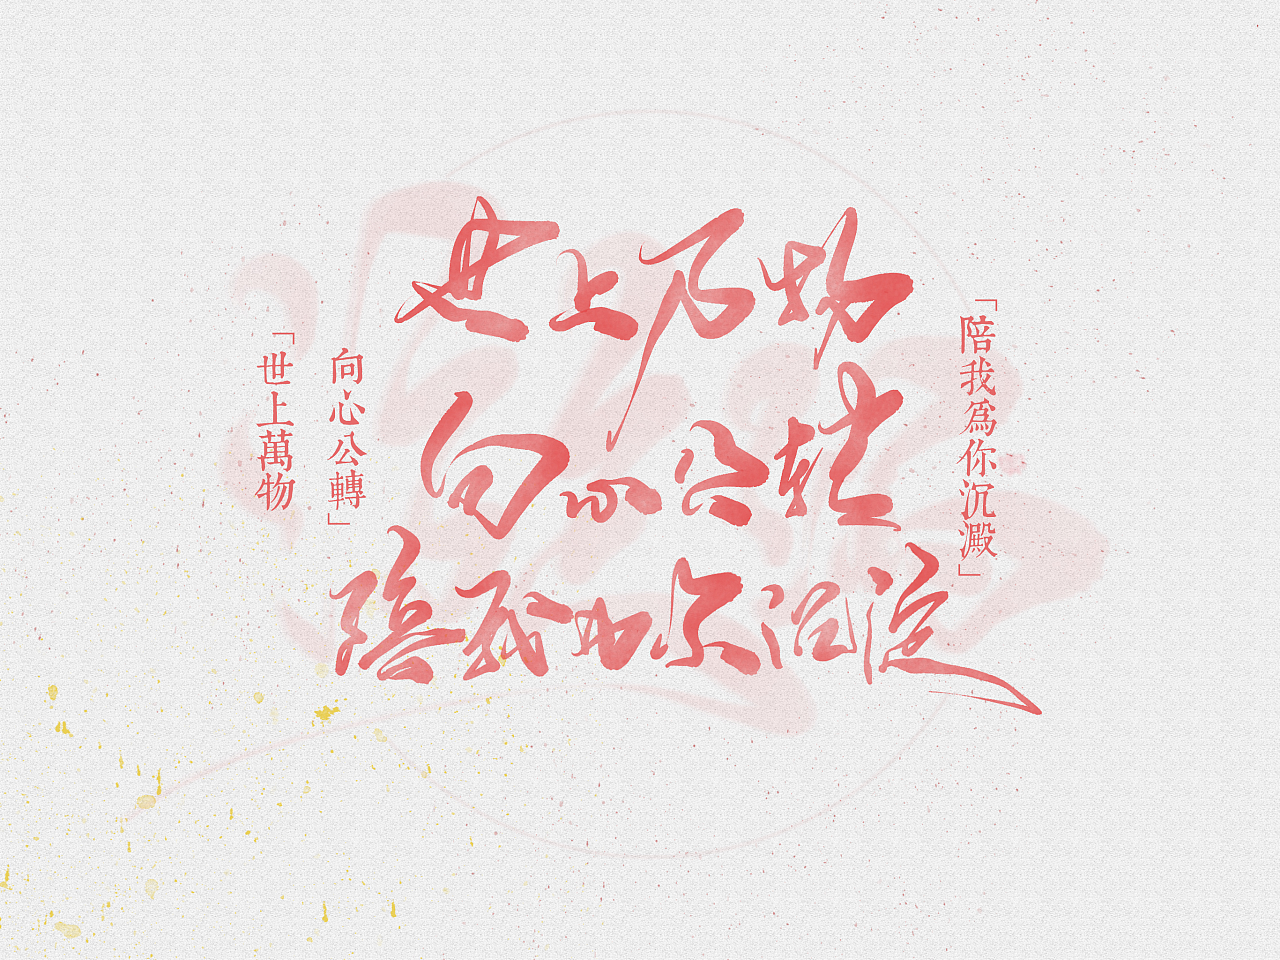 9P Handwriting vortex Brush calligraphy font - Chinese Design Inspiration